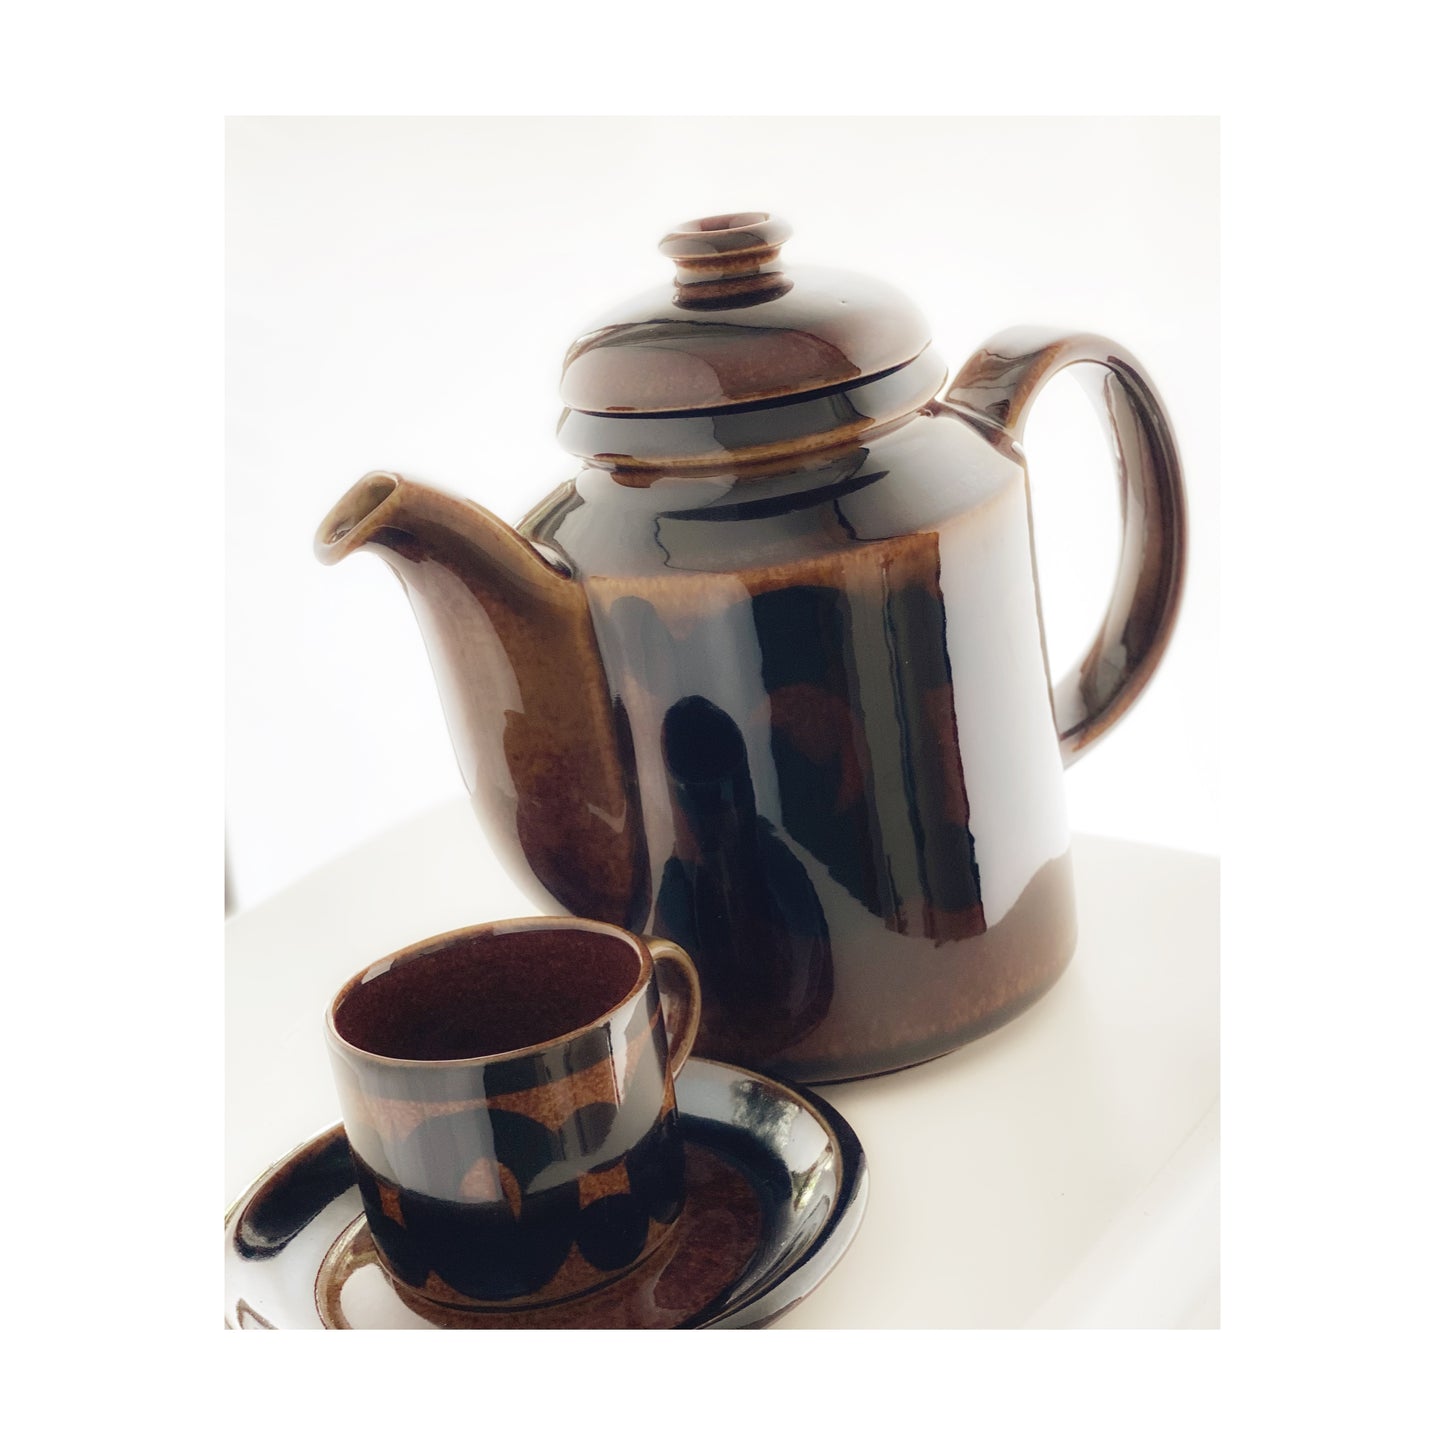 1960s Arabia 'Soraya' Tea or Coffee Service designed by Gunvor Olin-Grönqvist